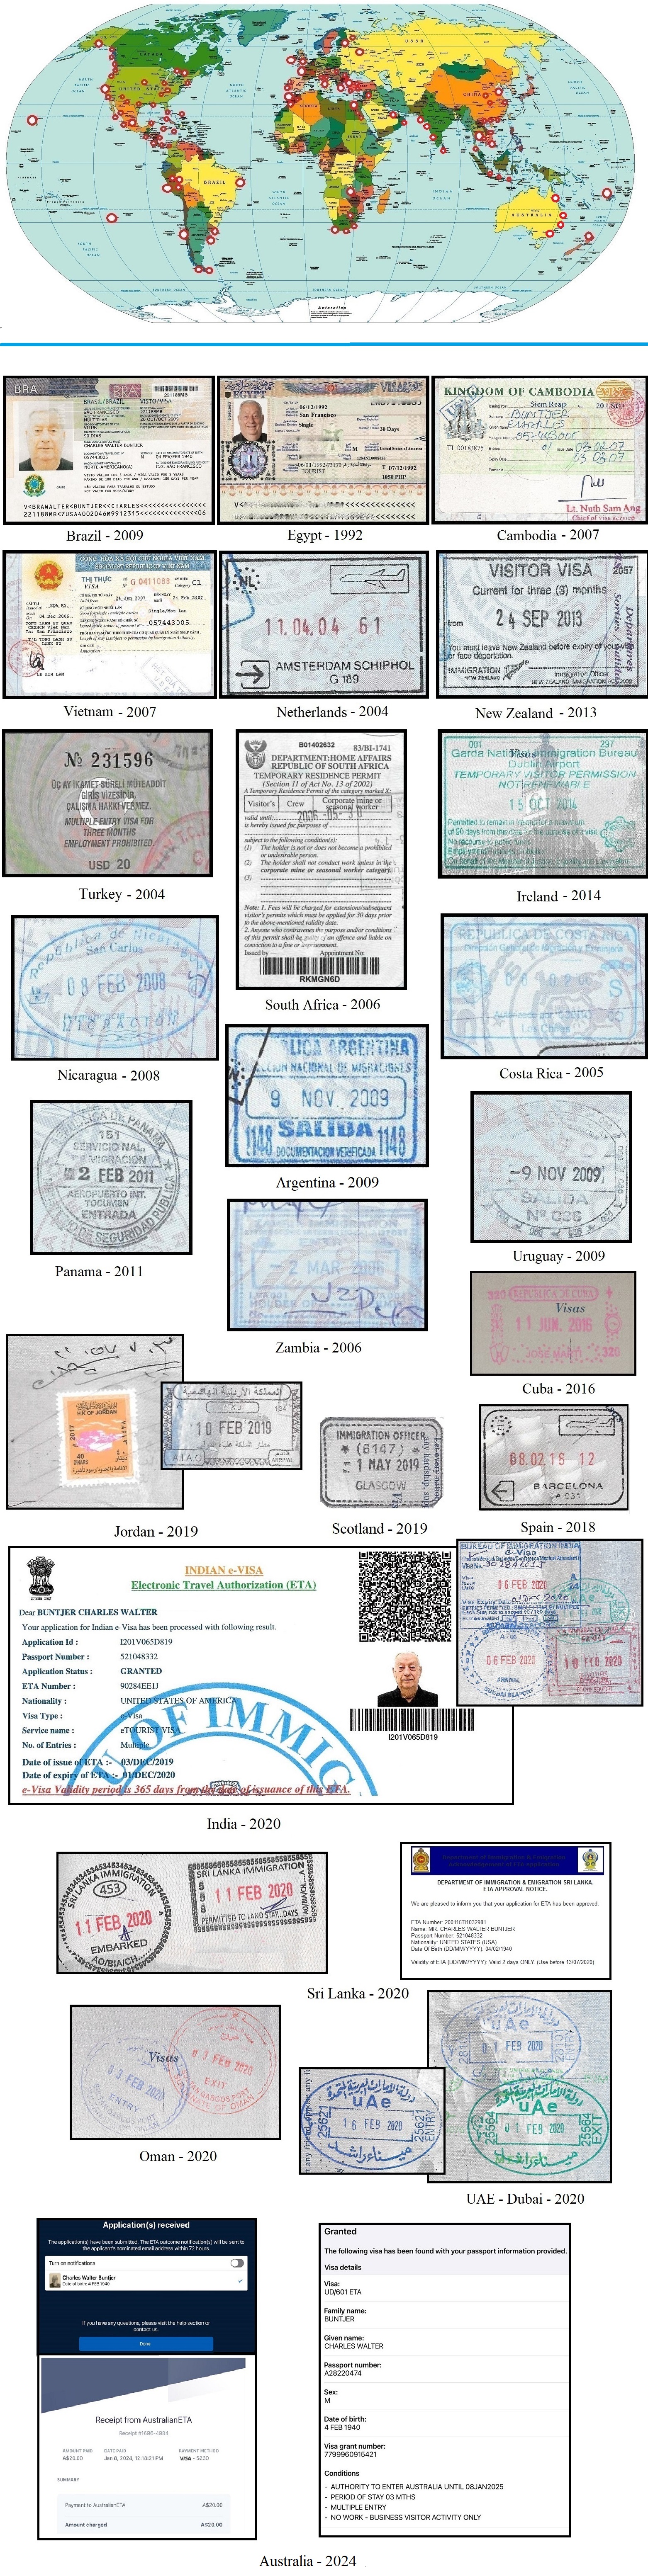 Visas and Passports